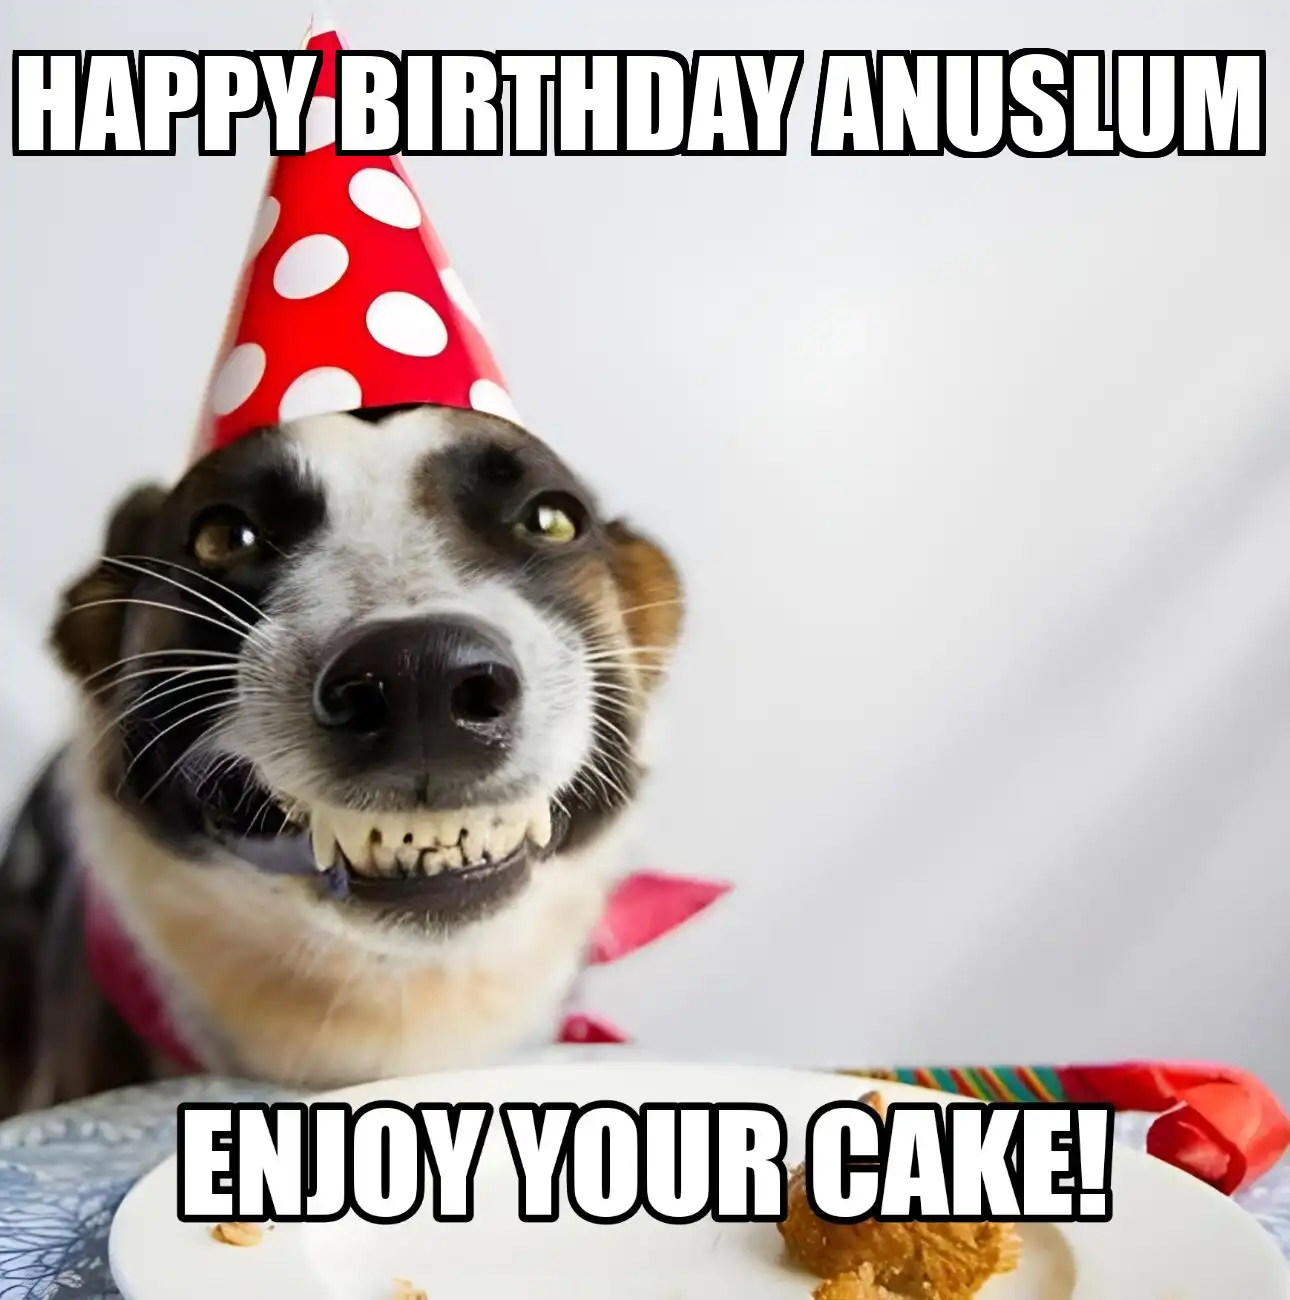 Happy Birthday Anuslum Enjoy Your Cake Dog Meme